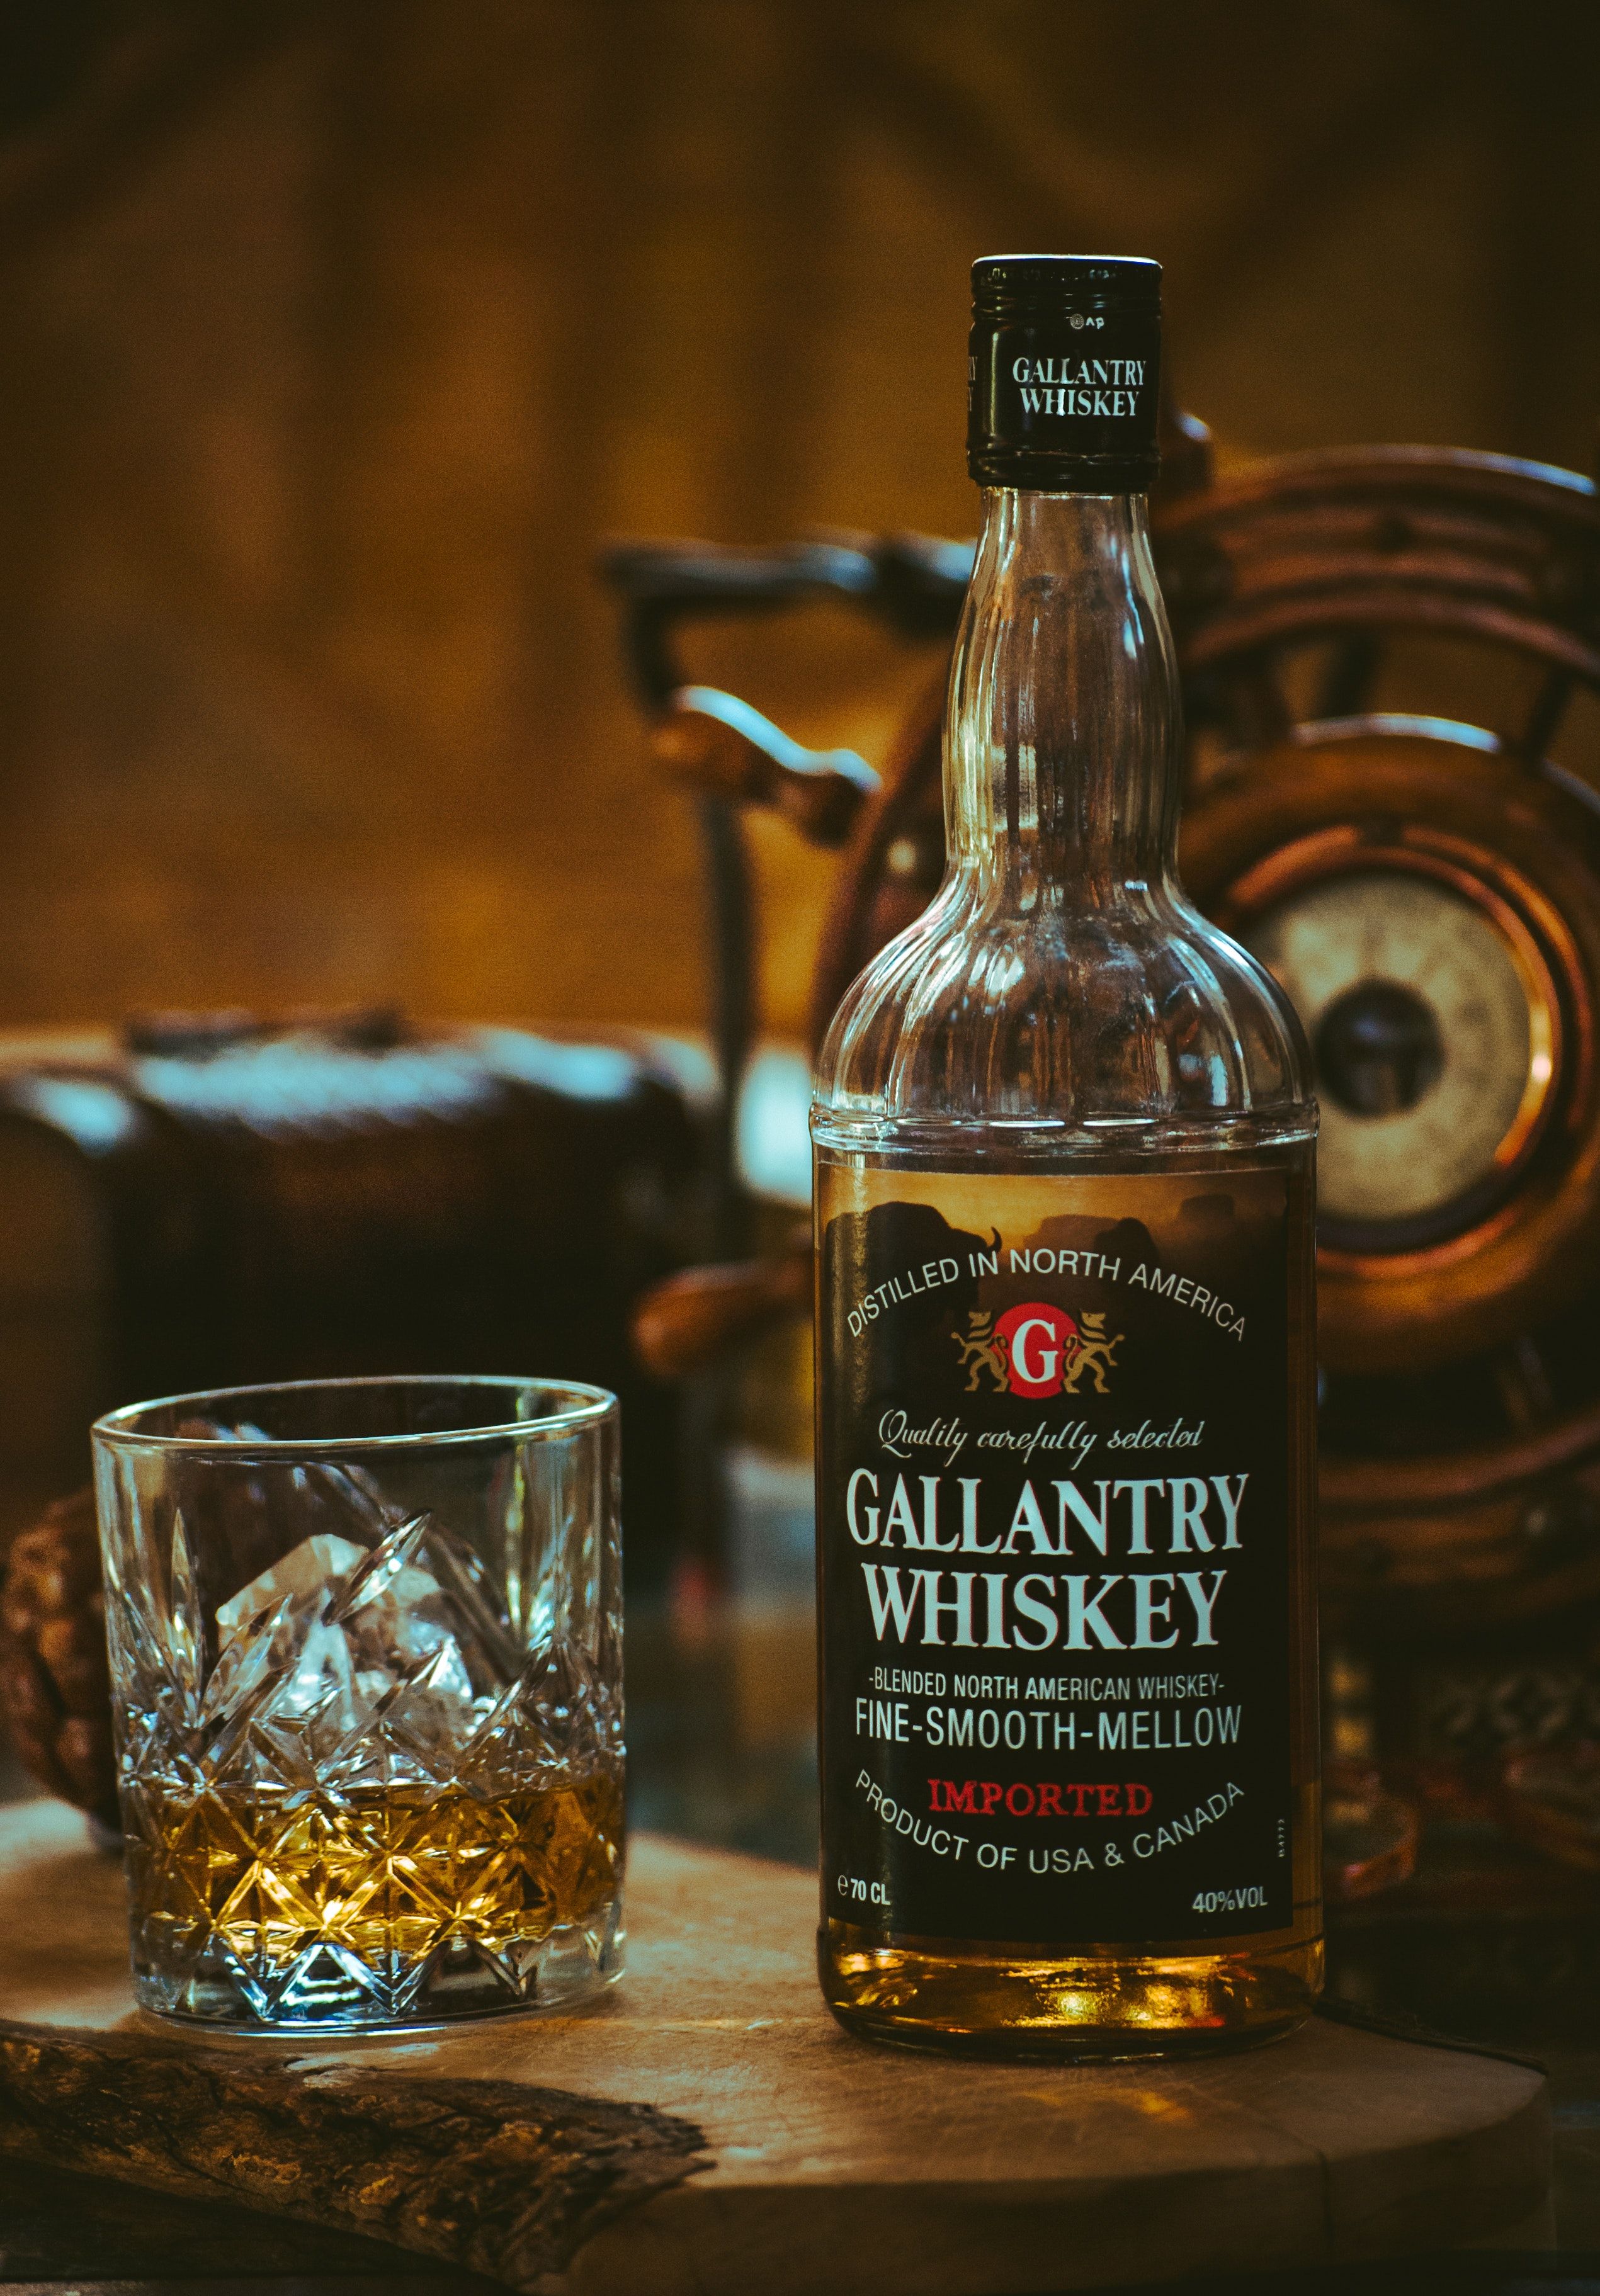 Gallantry Whiskey Bottle Beside Glass · Free